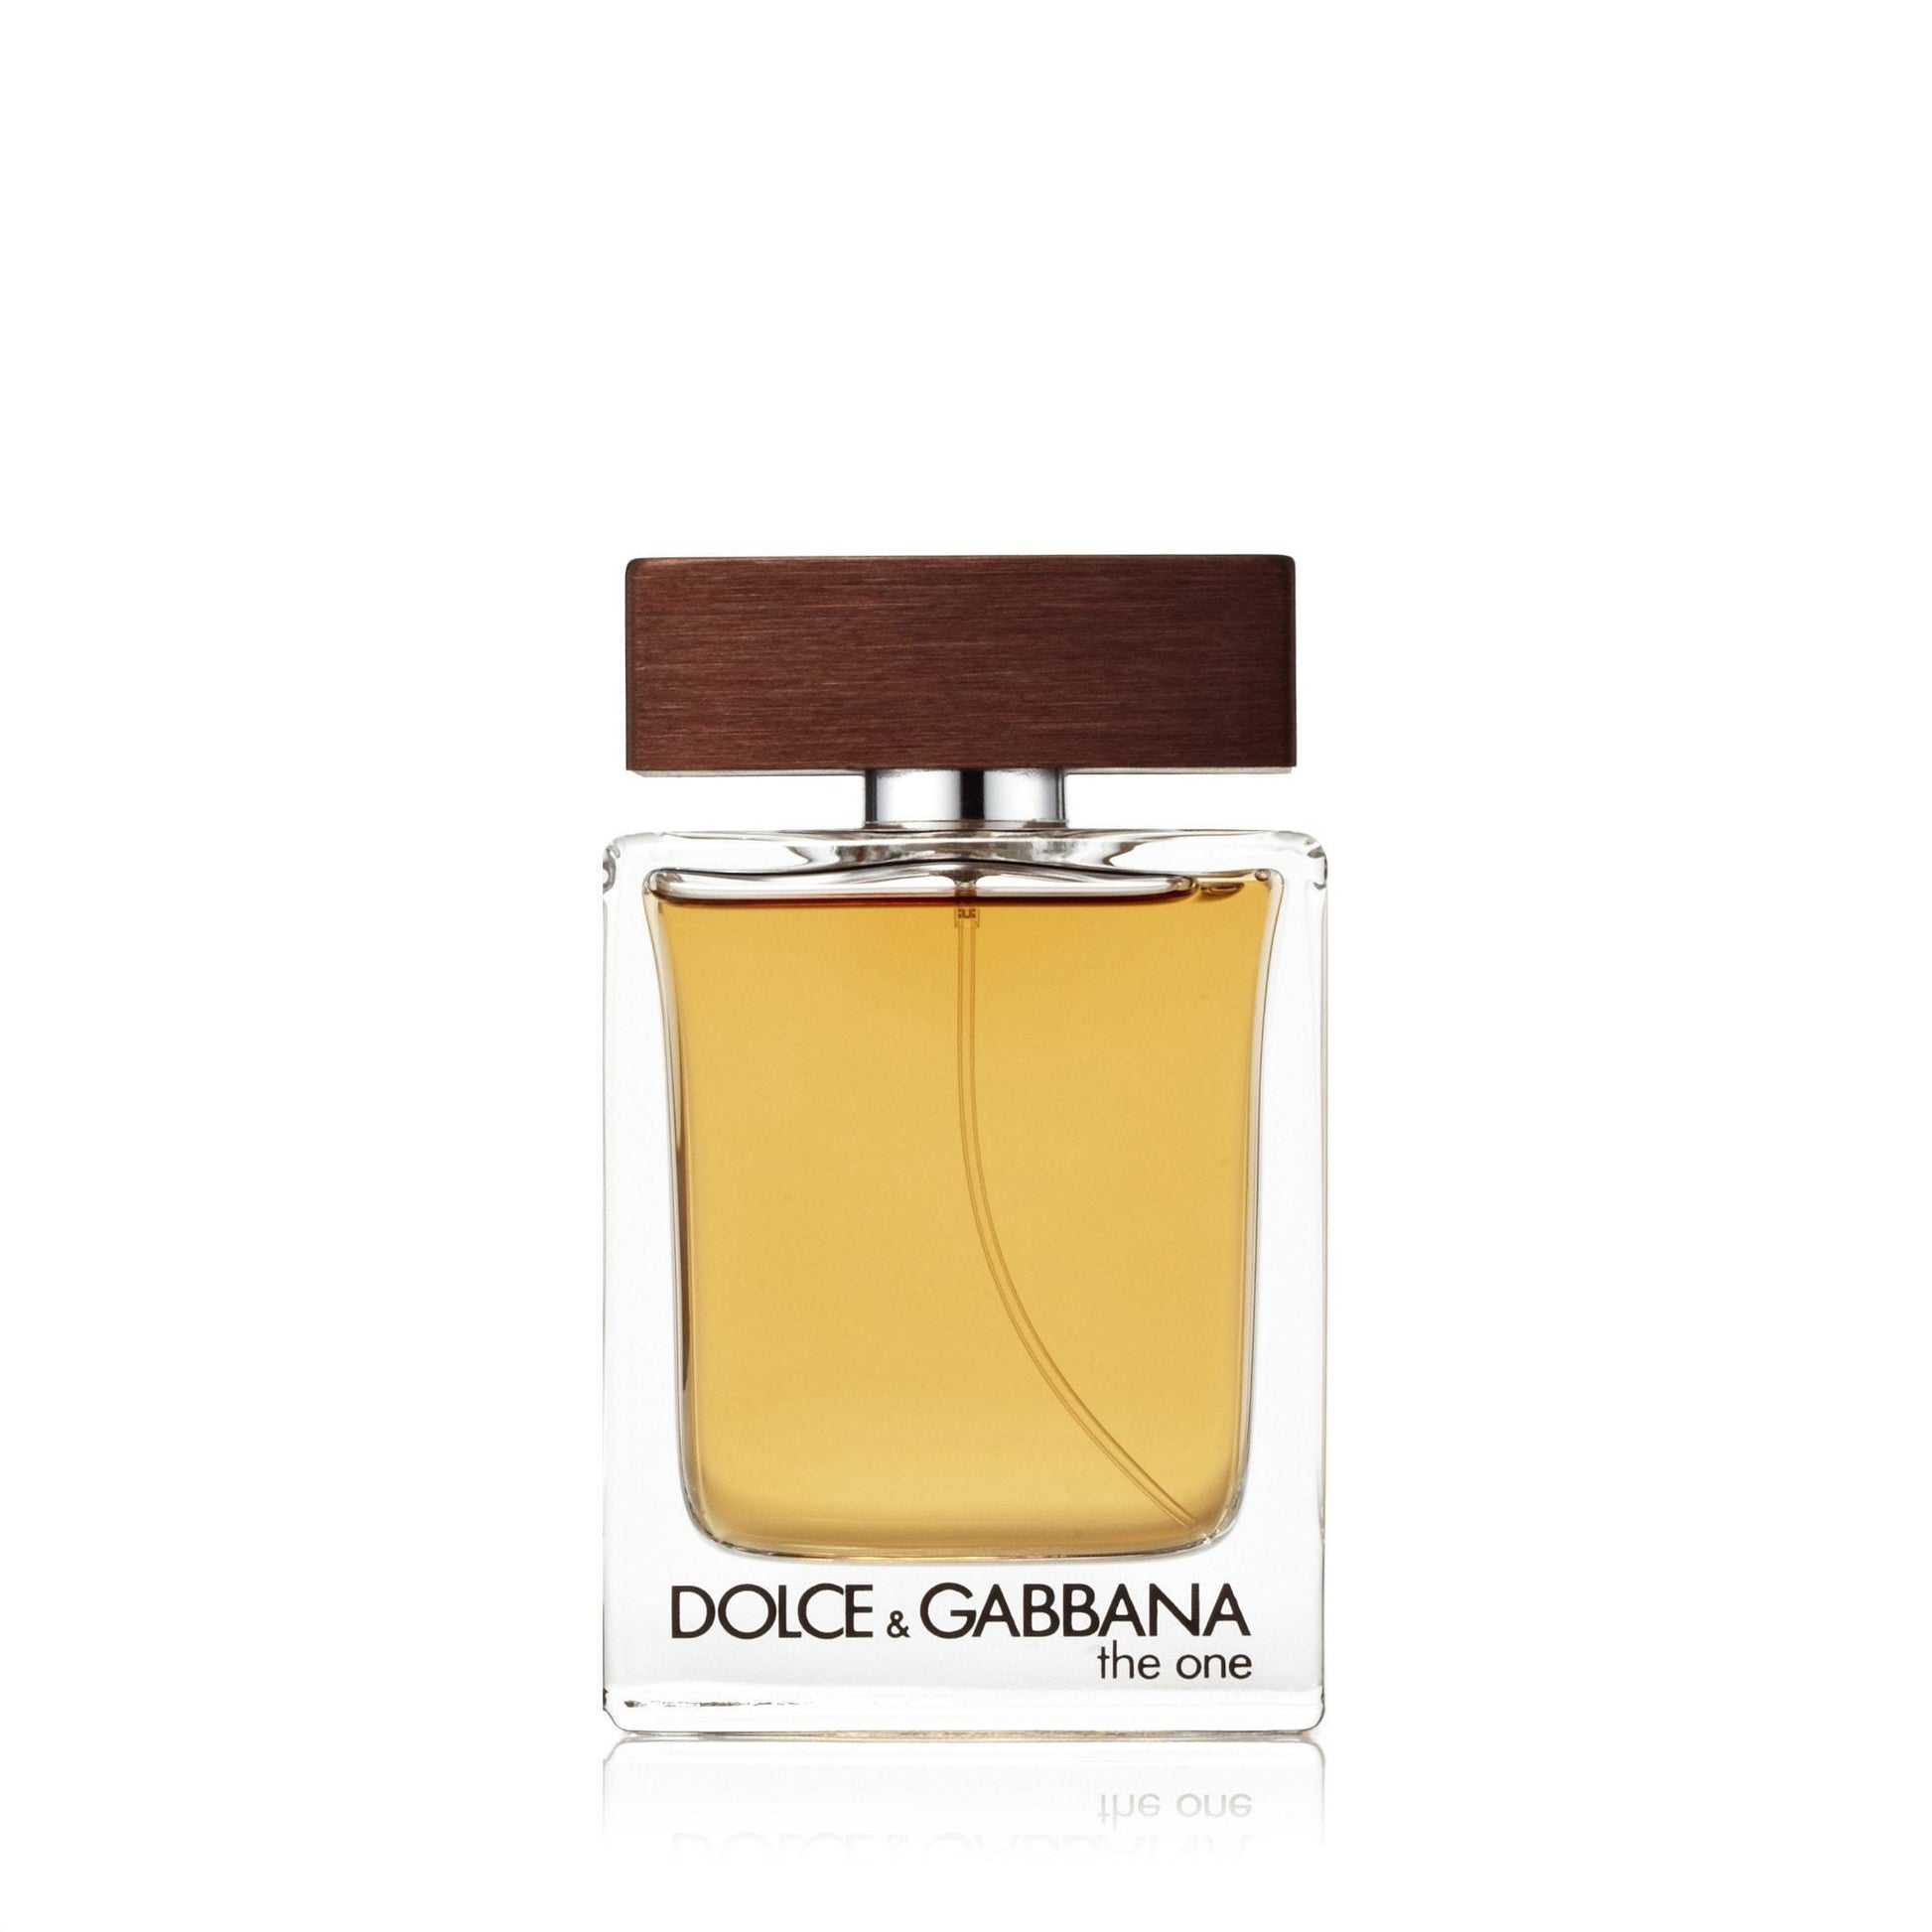 The One Eau de Toilette Spray for Men by Dolce & Gabbana, Product image 7